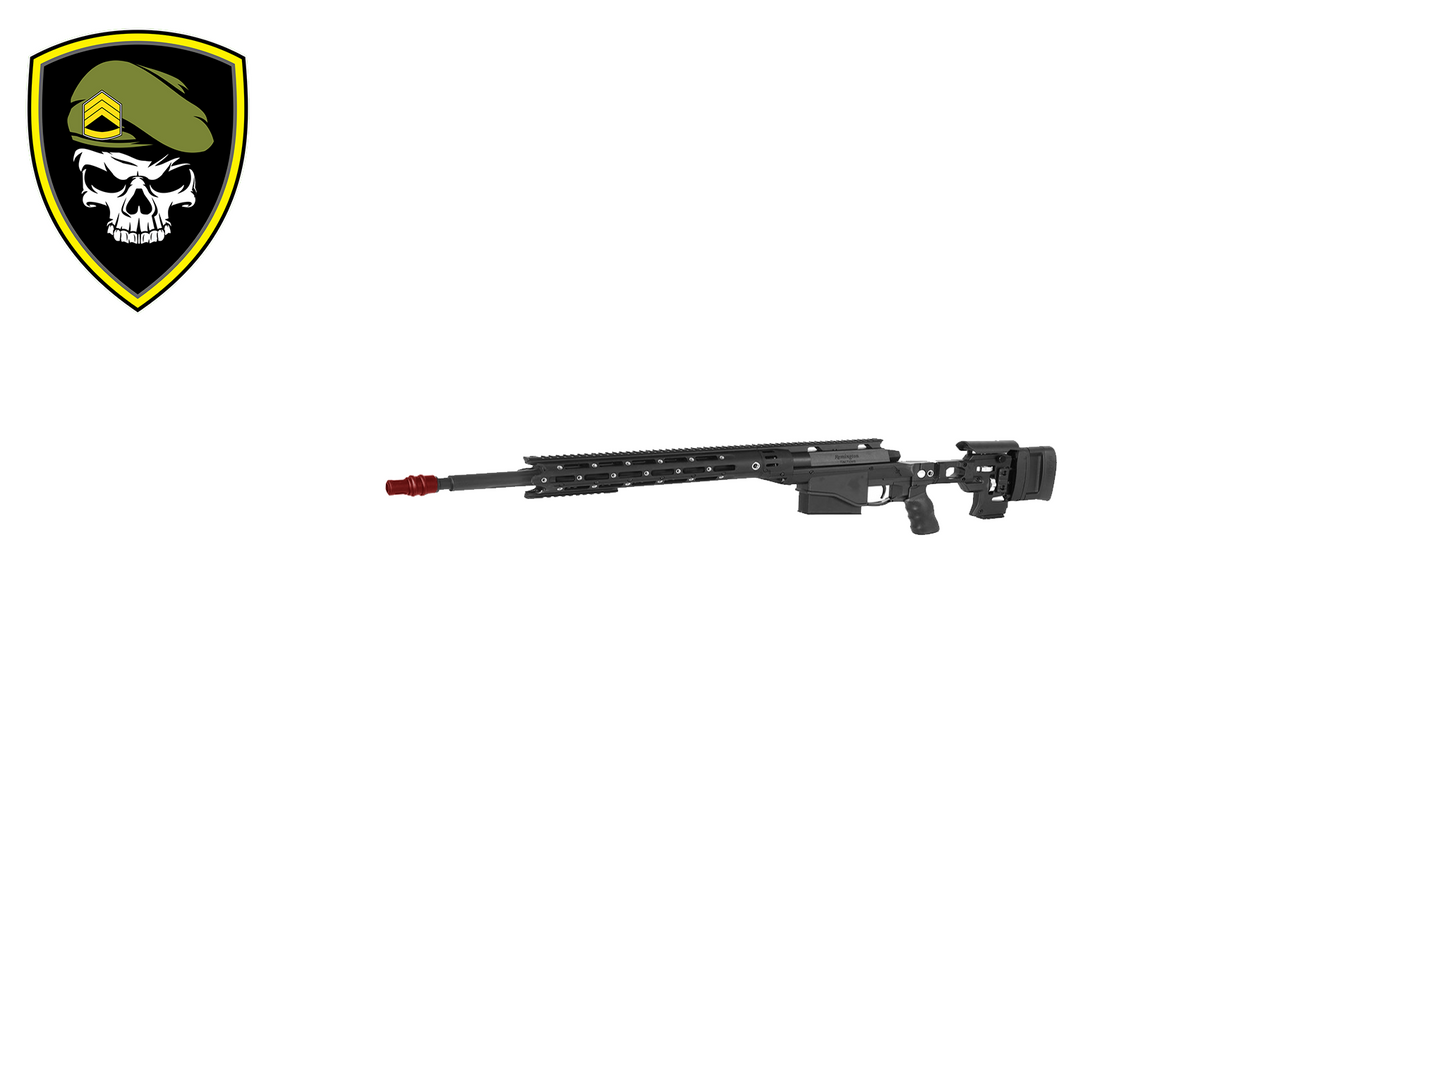 Remington MSR Sniper Gel Blaster Rifle - Command Elite Hobbies